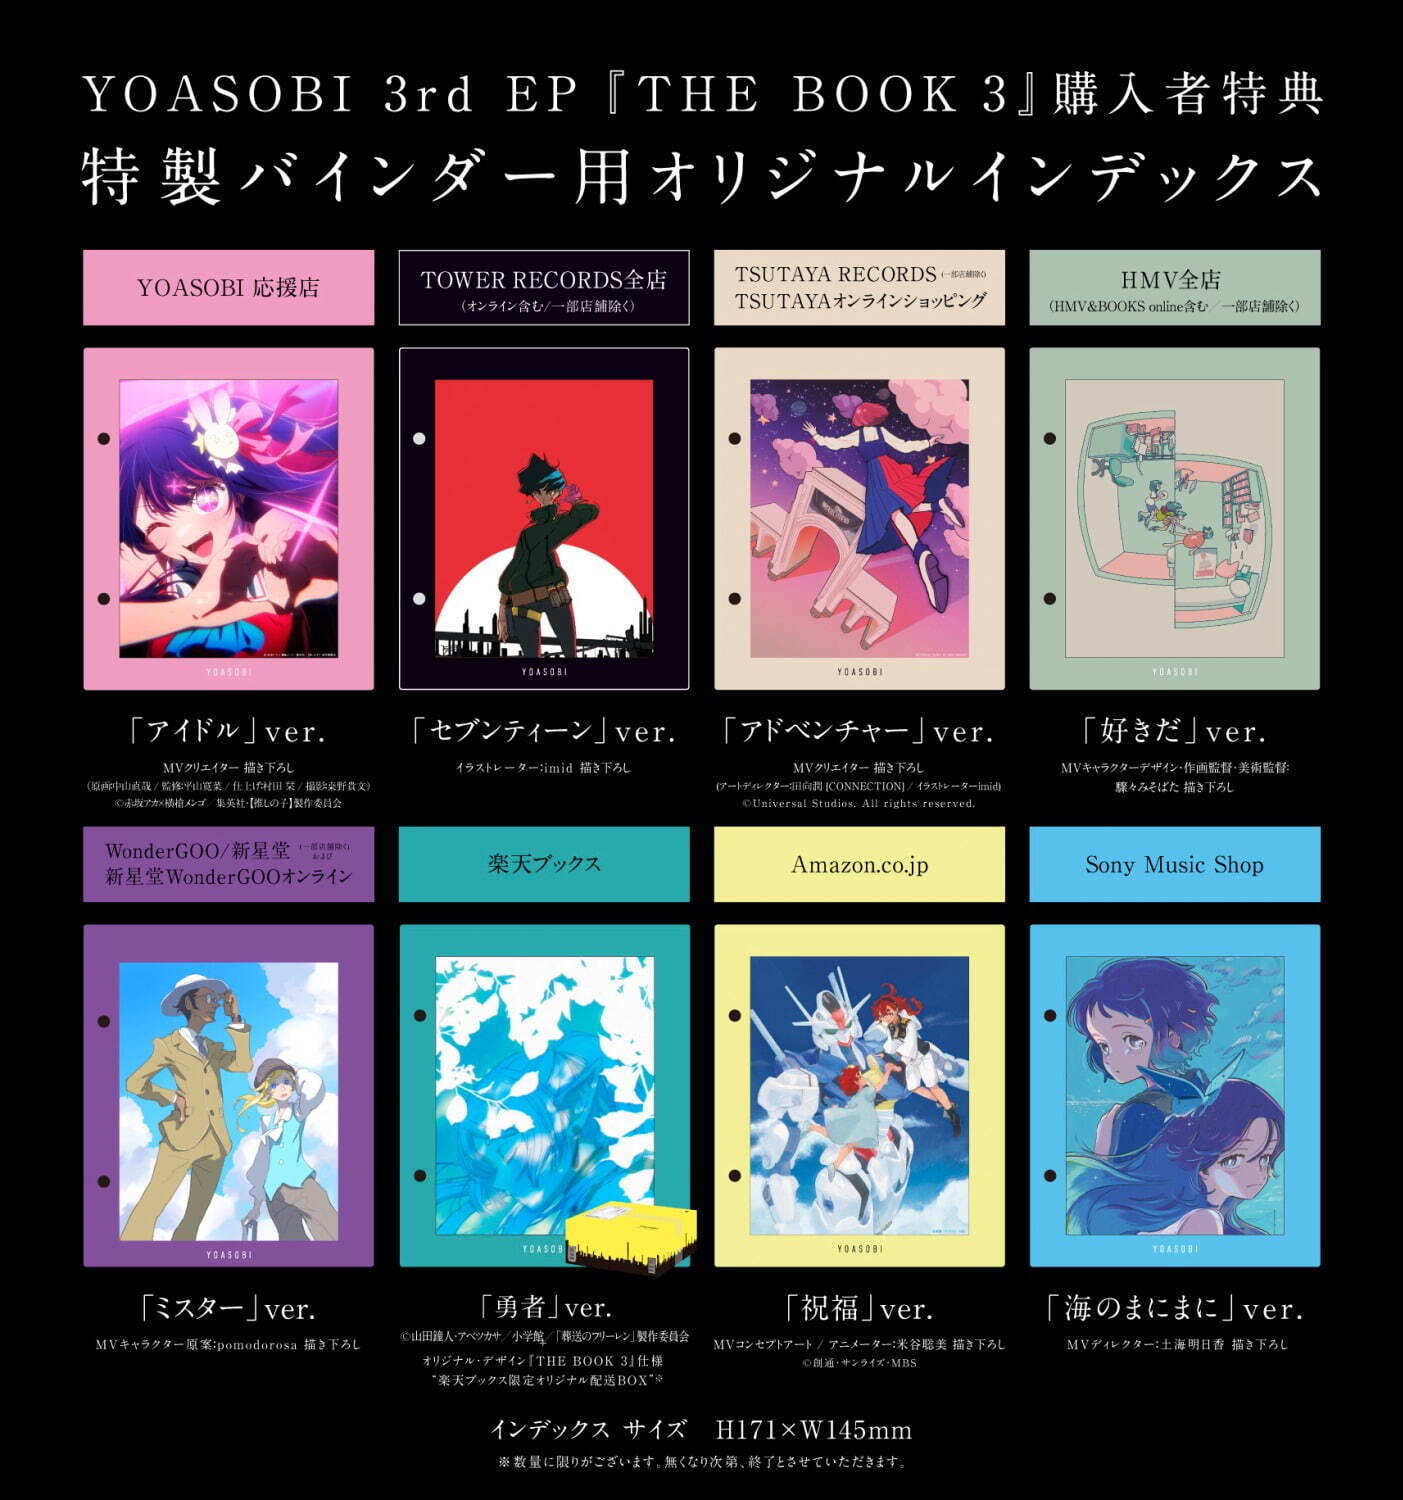 YOASOBIの新作EP『THE BOOK 3』「勇者」「祝福」「アドベンチャー ...